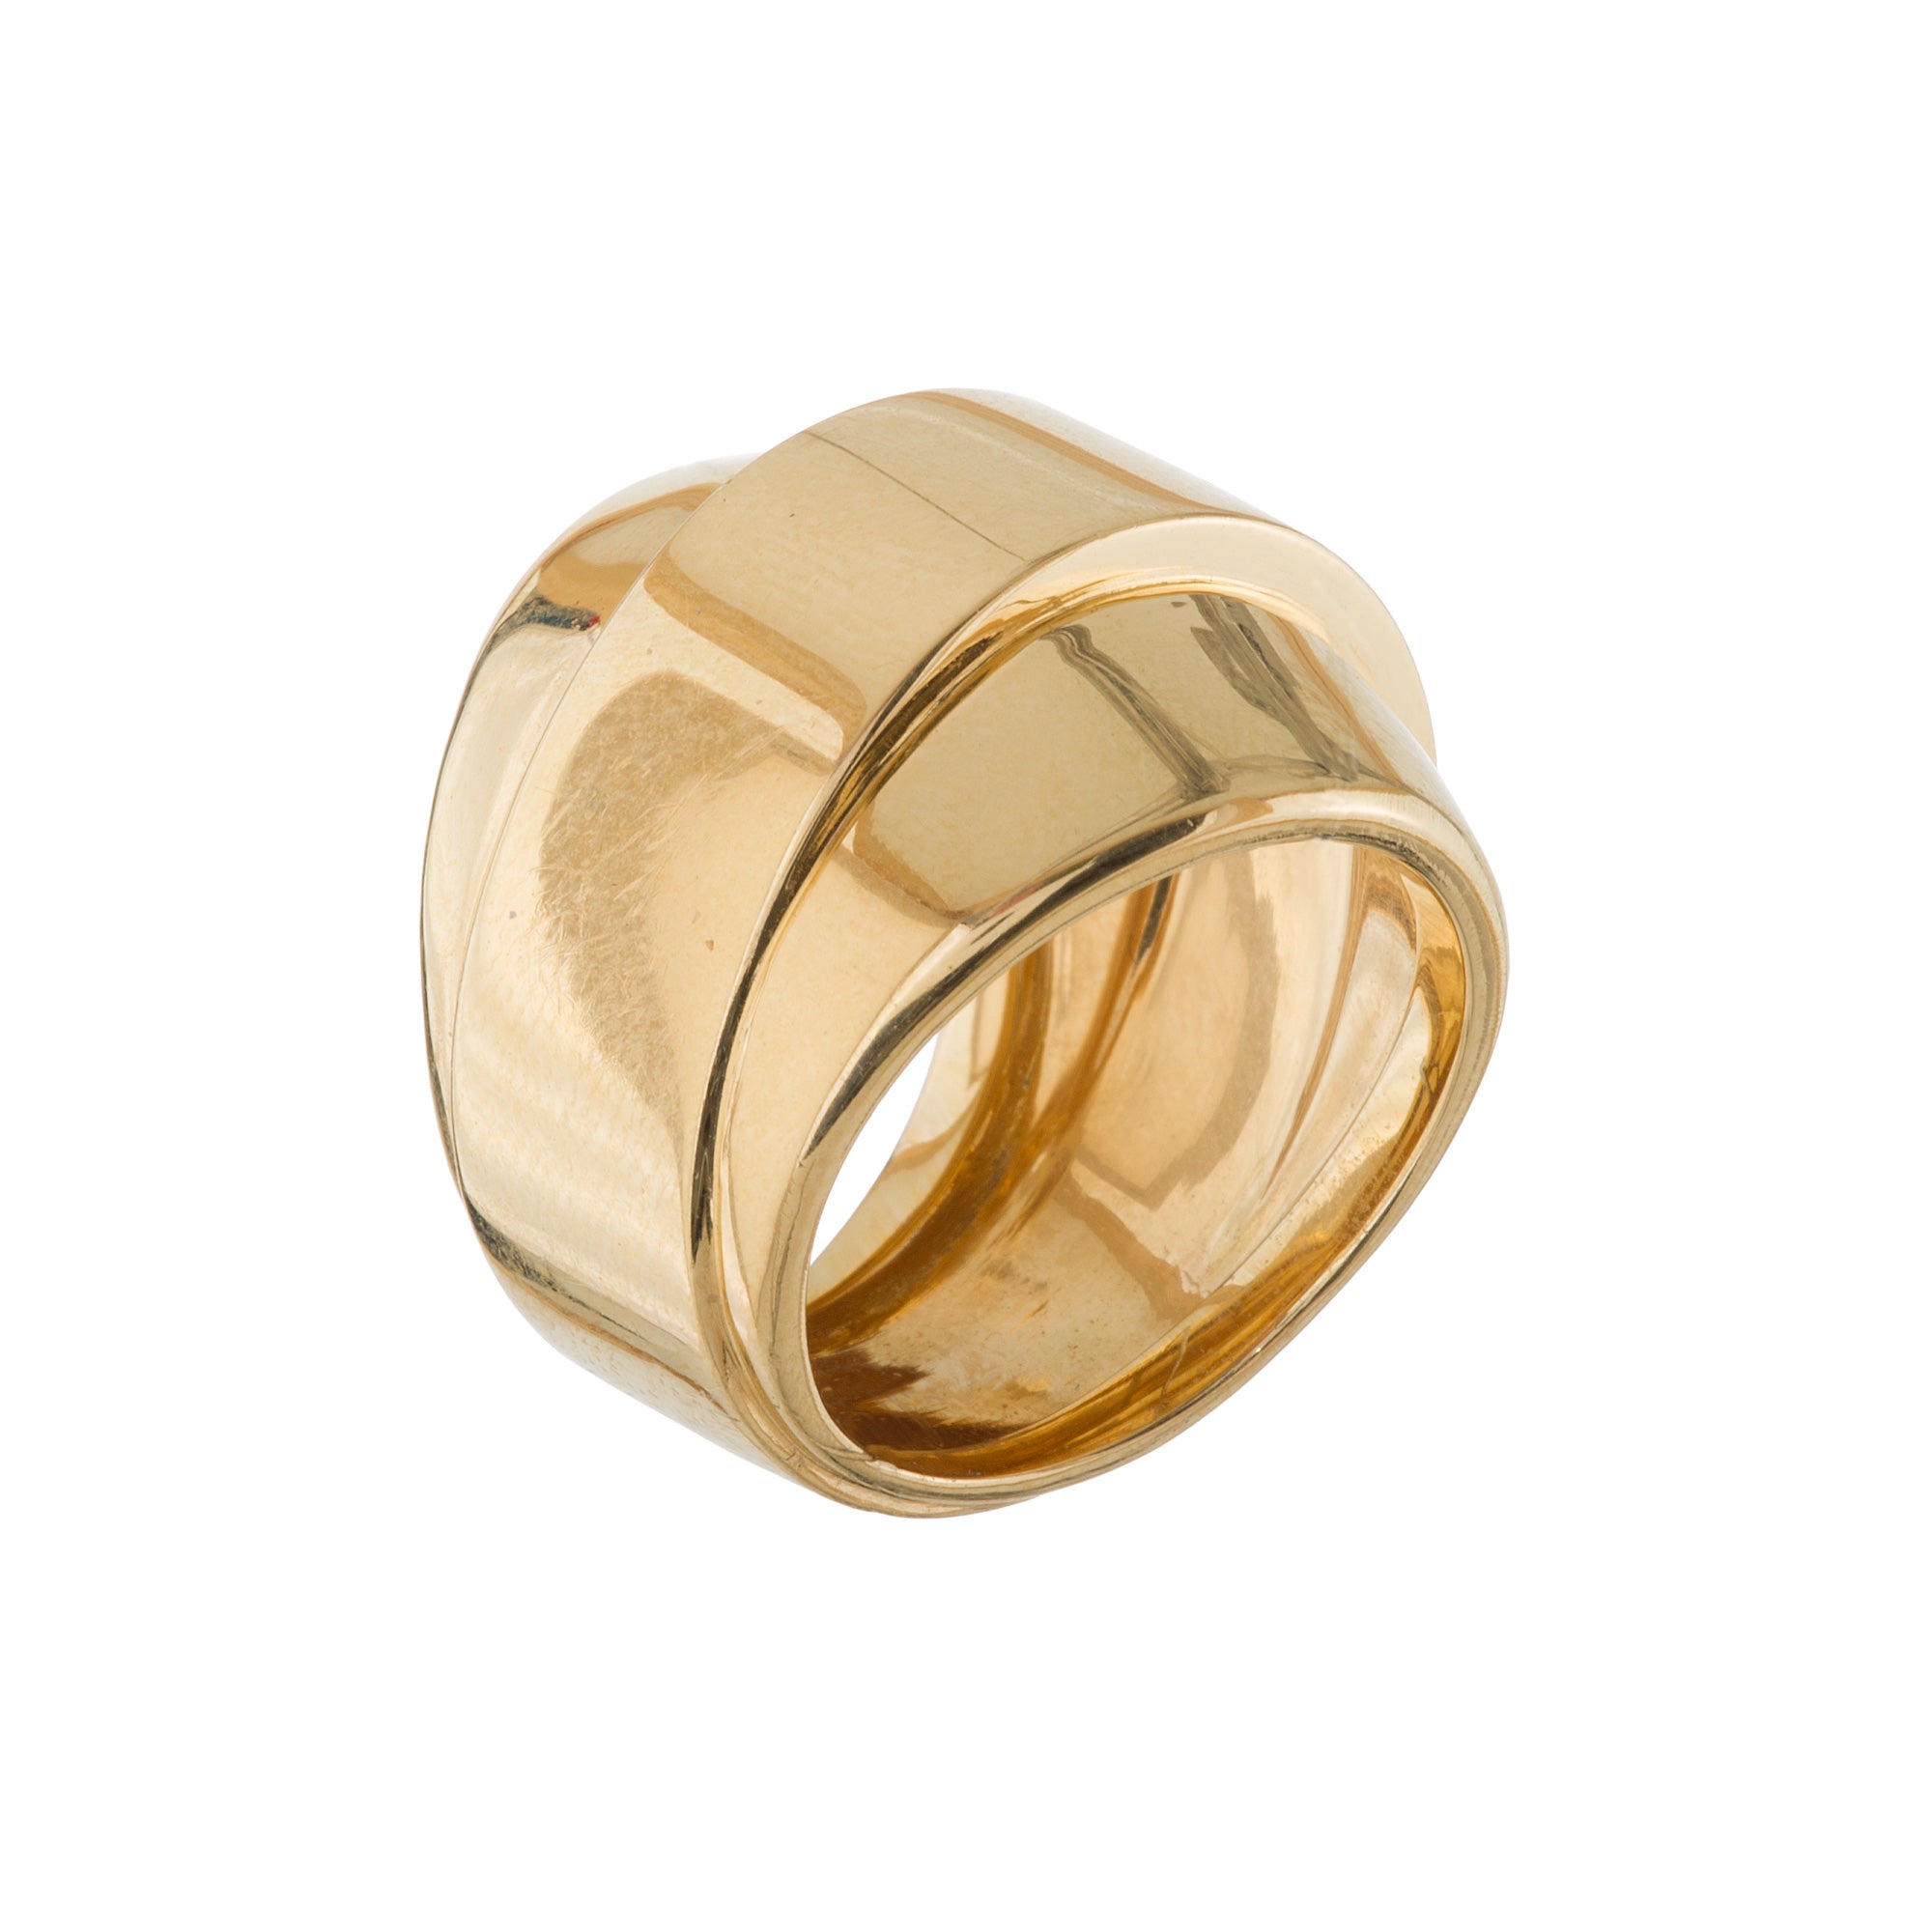 ROME III gold ring